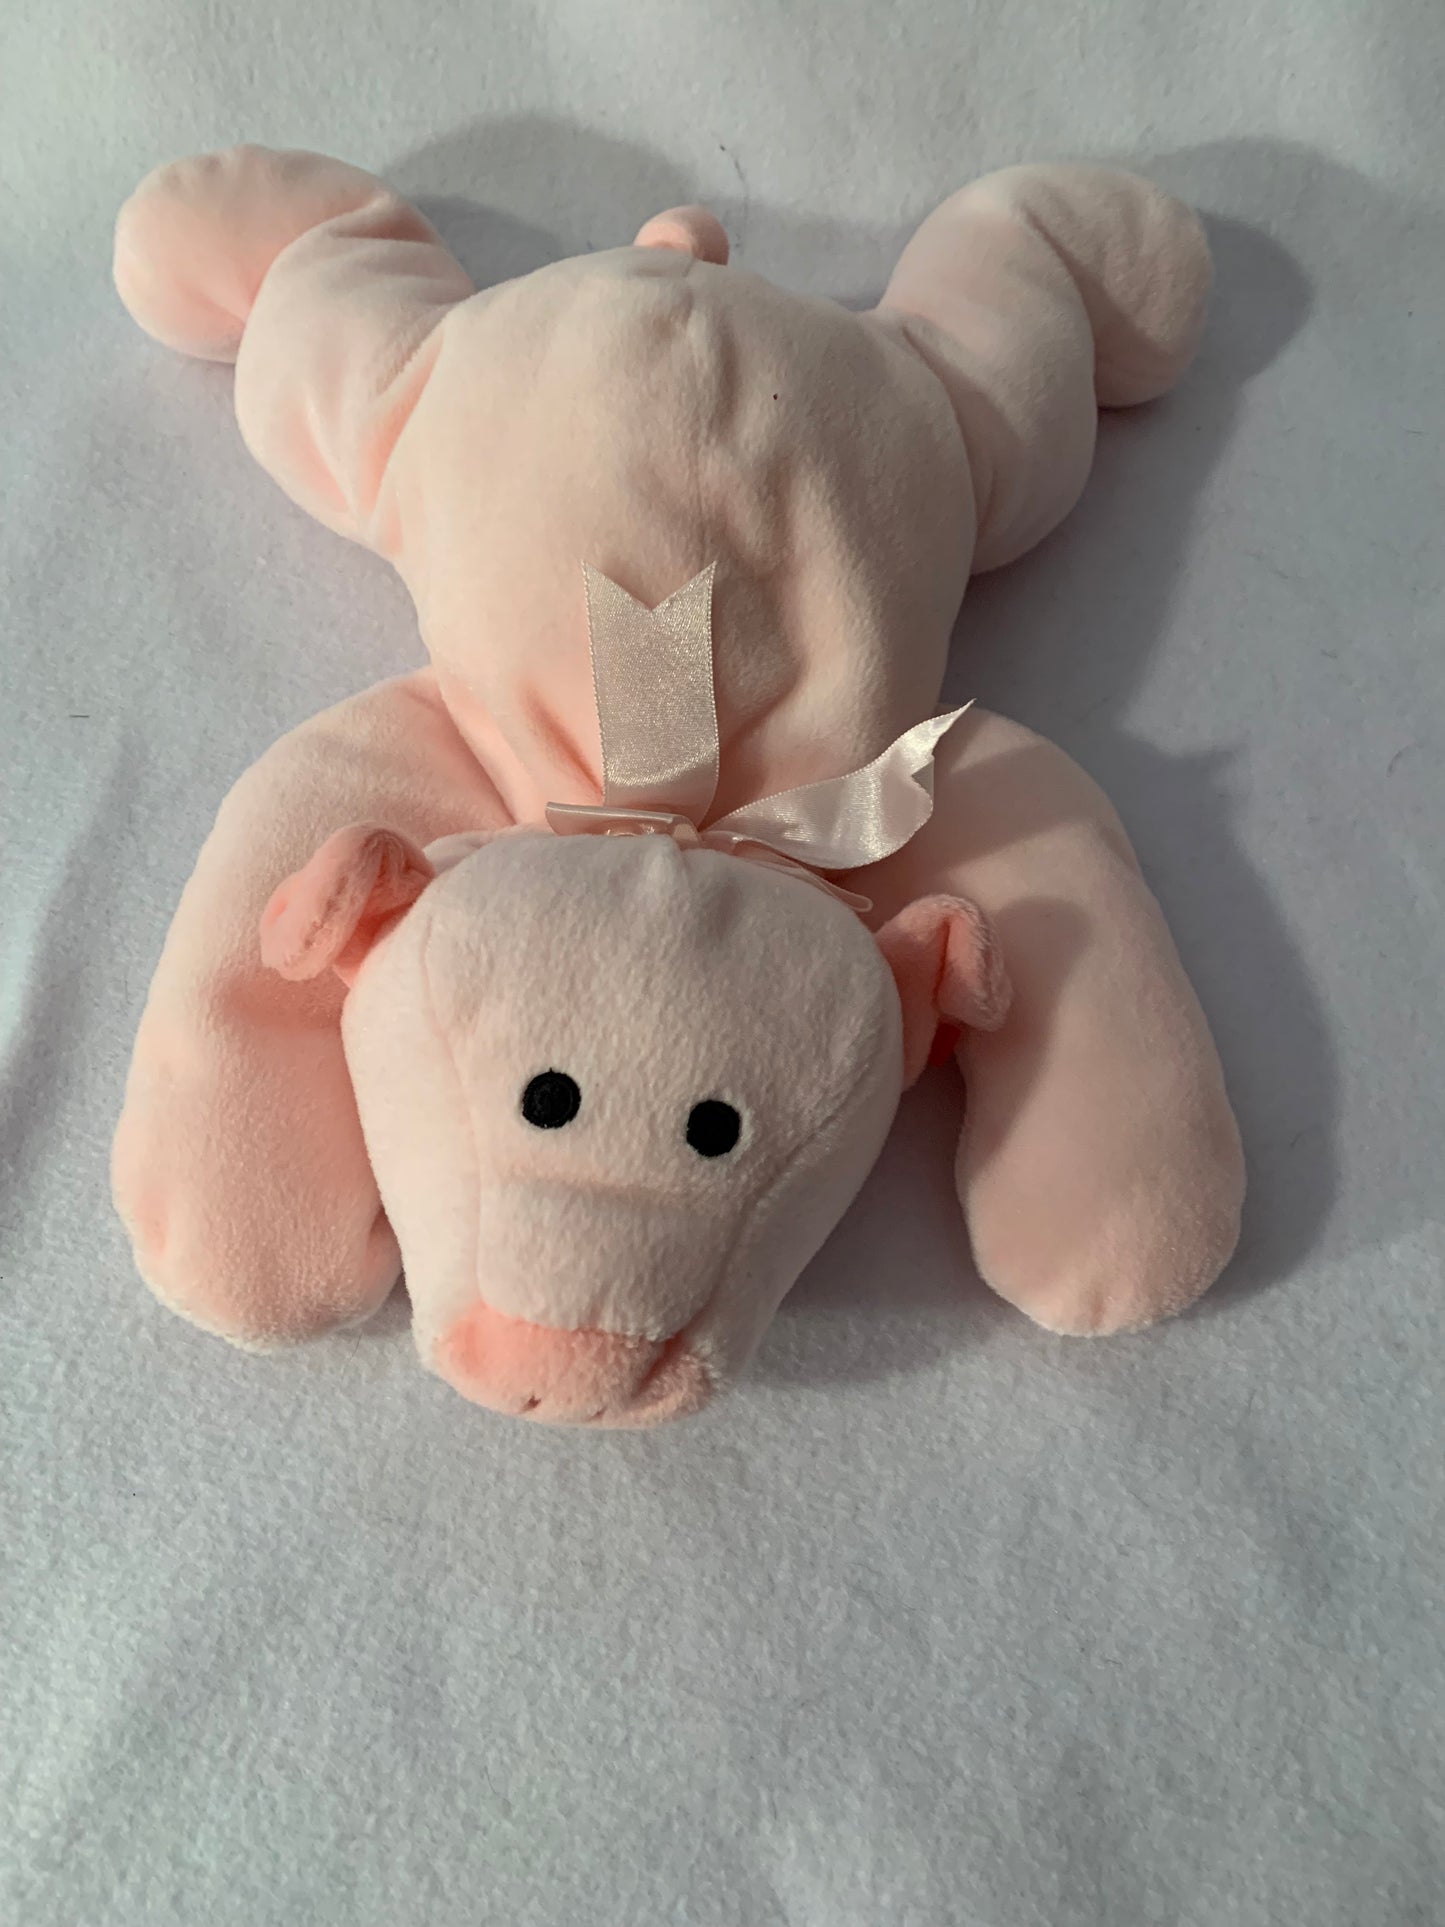 Weighted stuffed animal - bear, zebra, frog, pig, lamb or elephant with 3 lbs, washable plush buddy, autism sensory toy